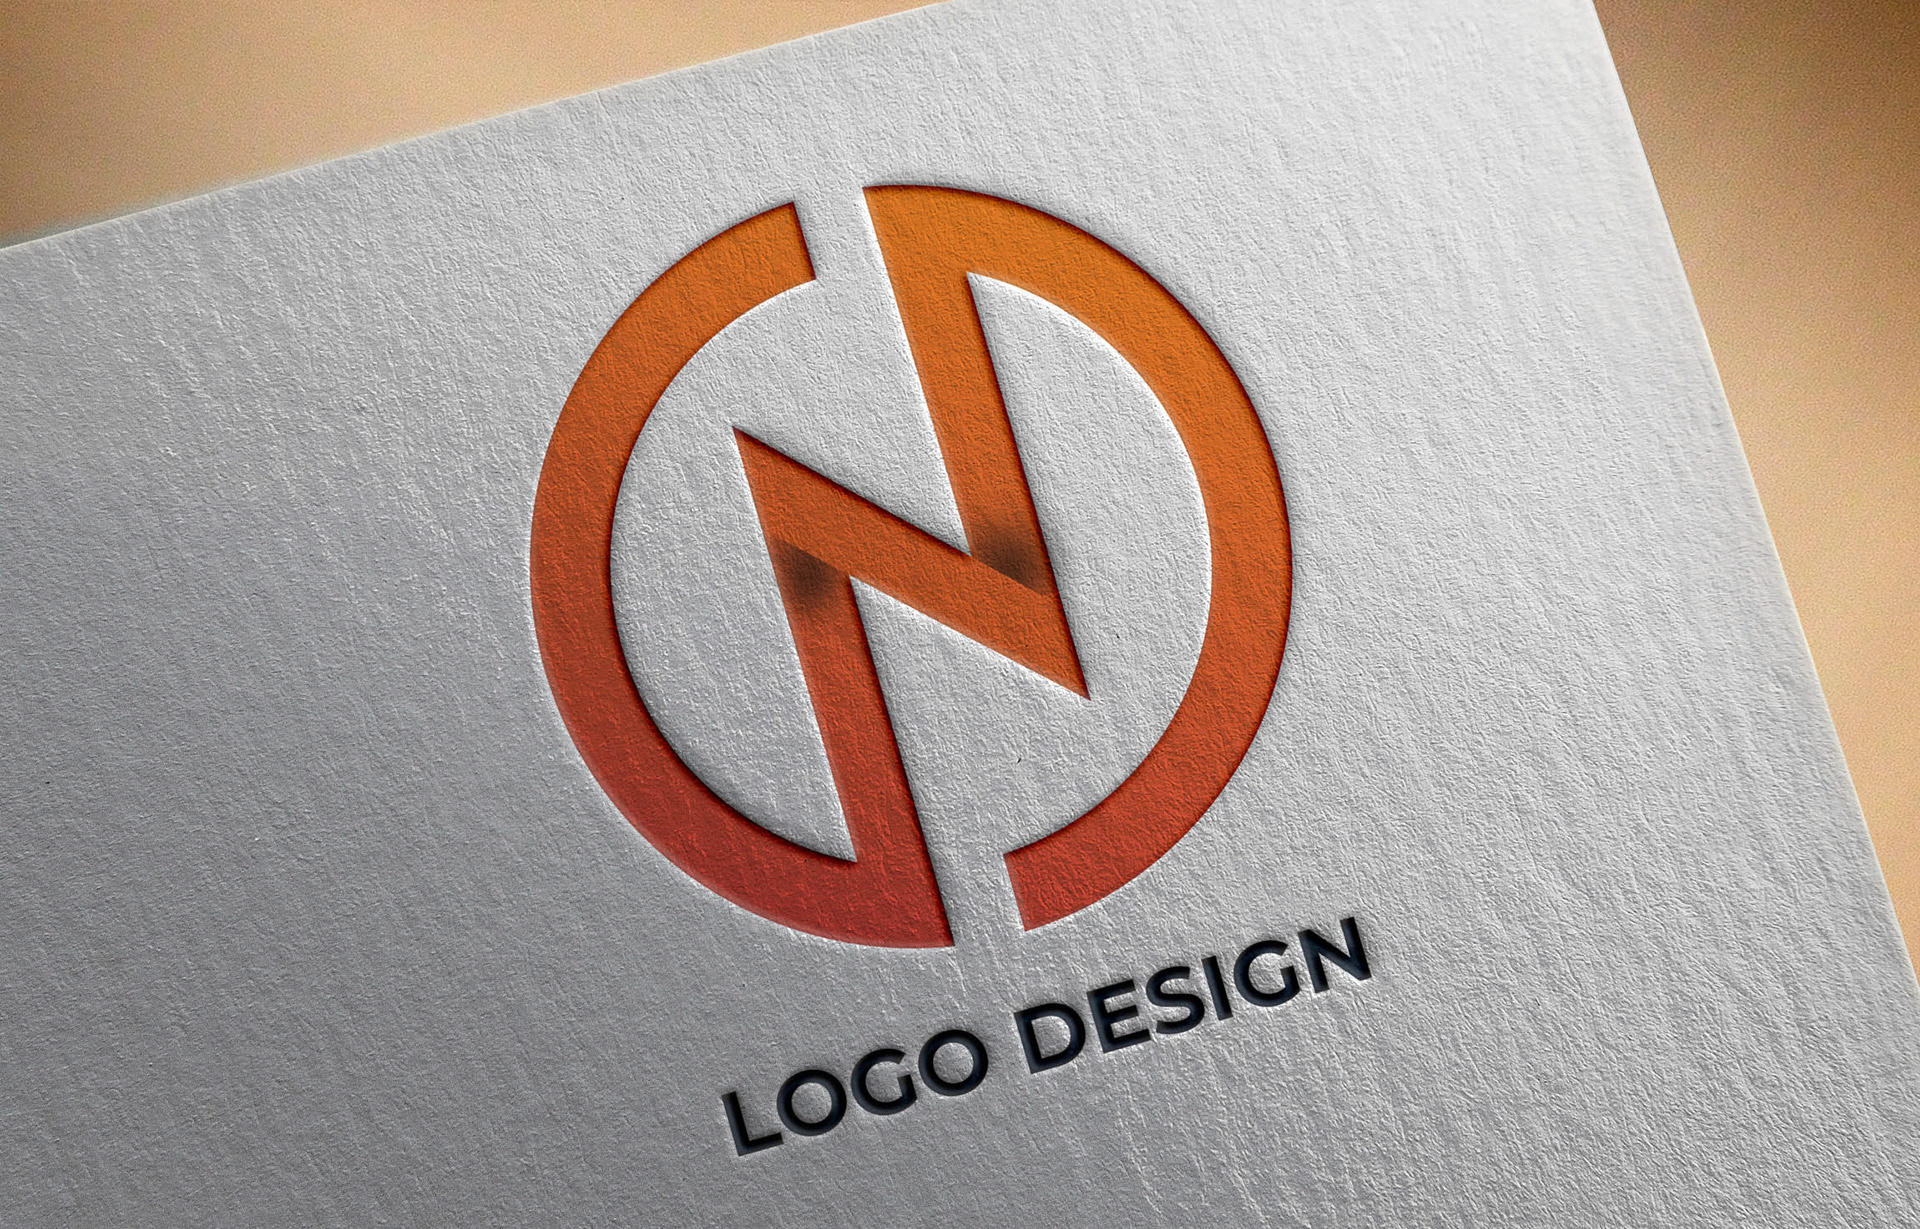 creative letter logo design ideas